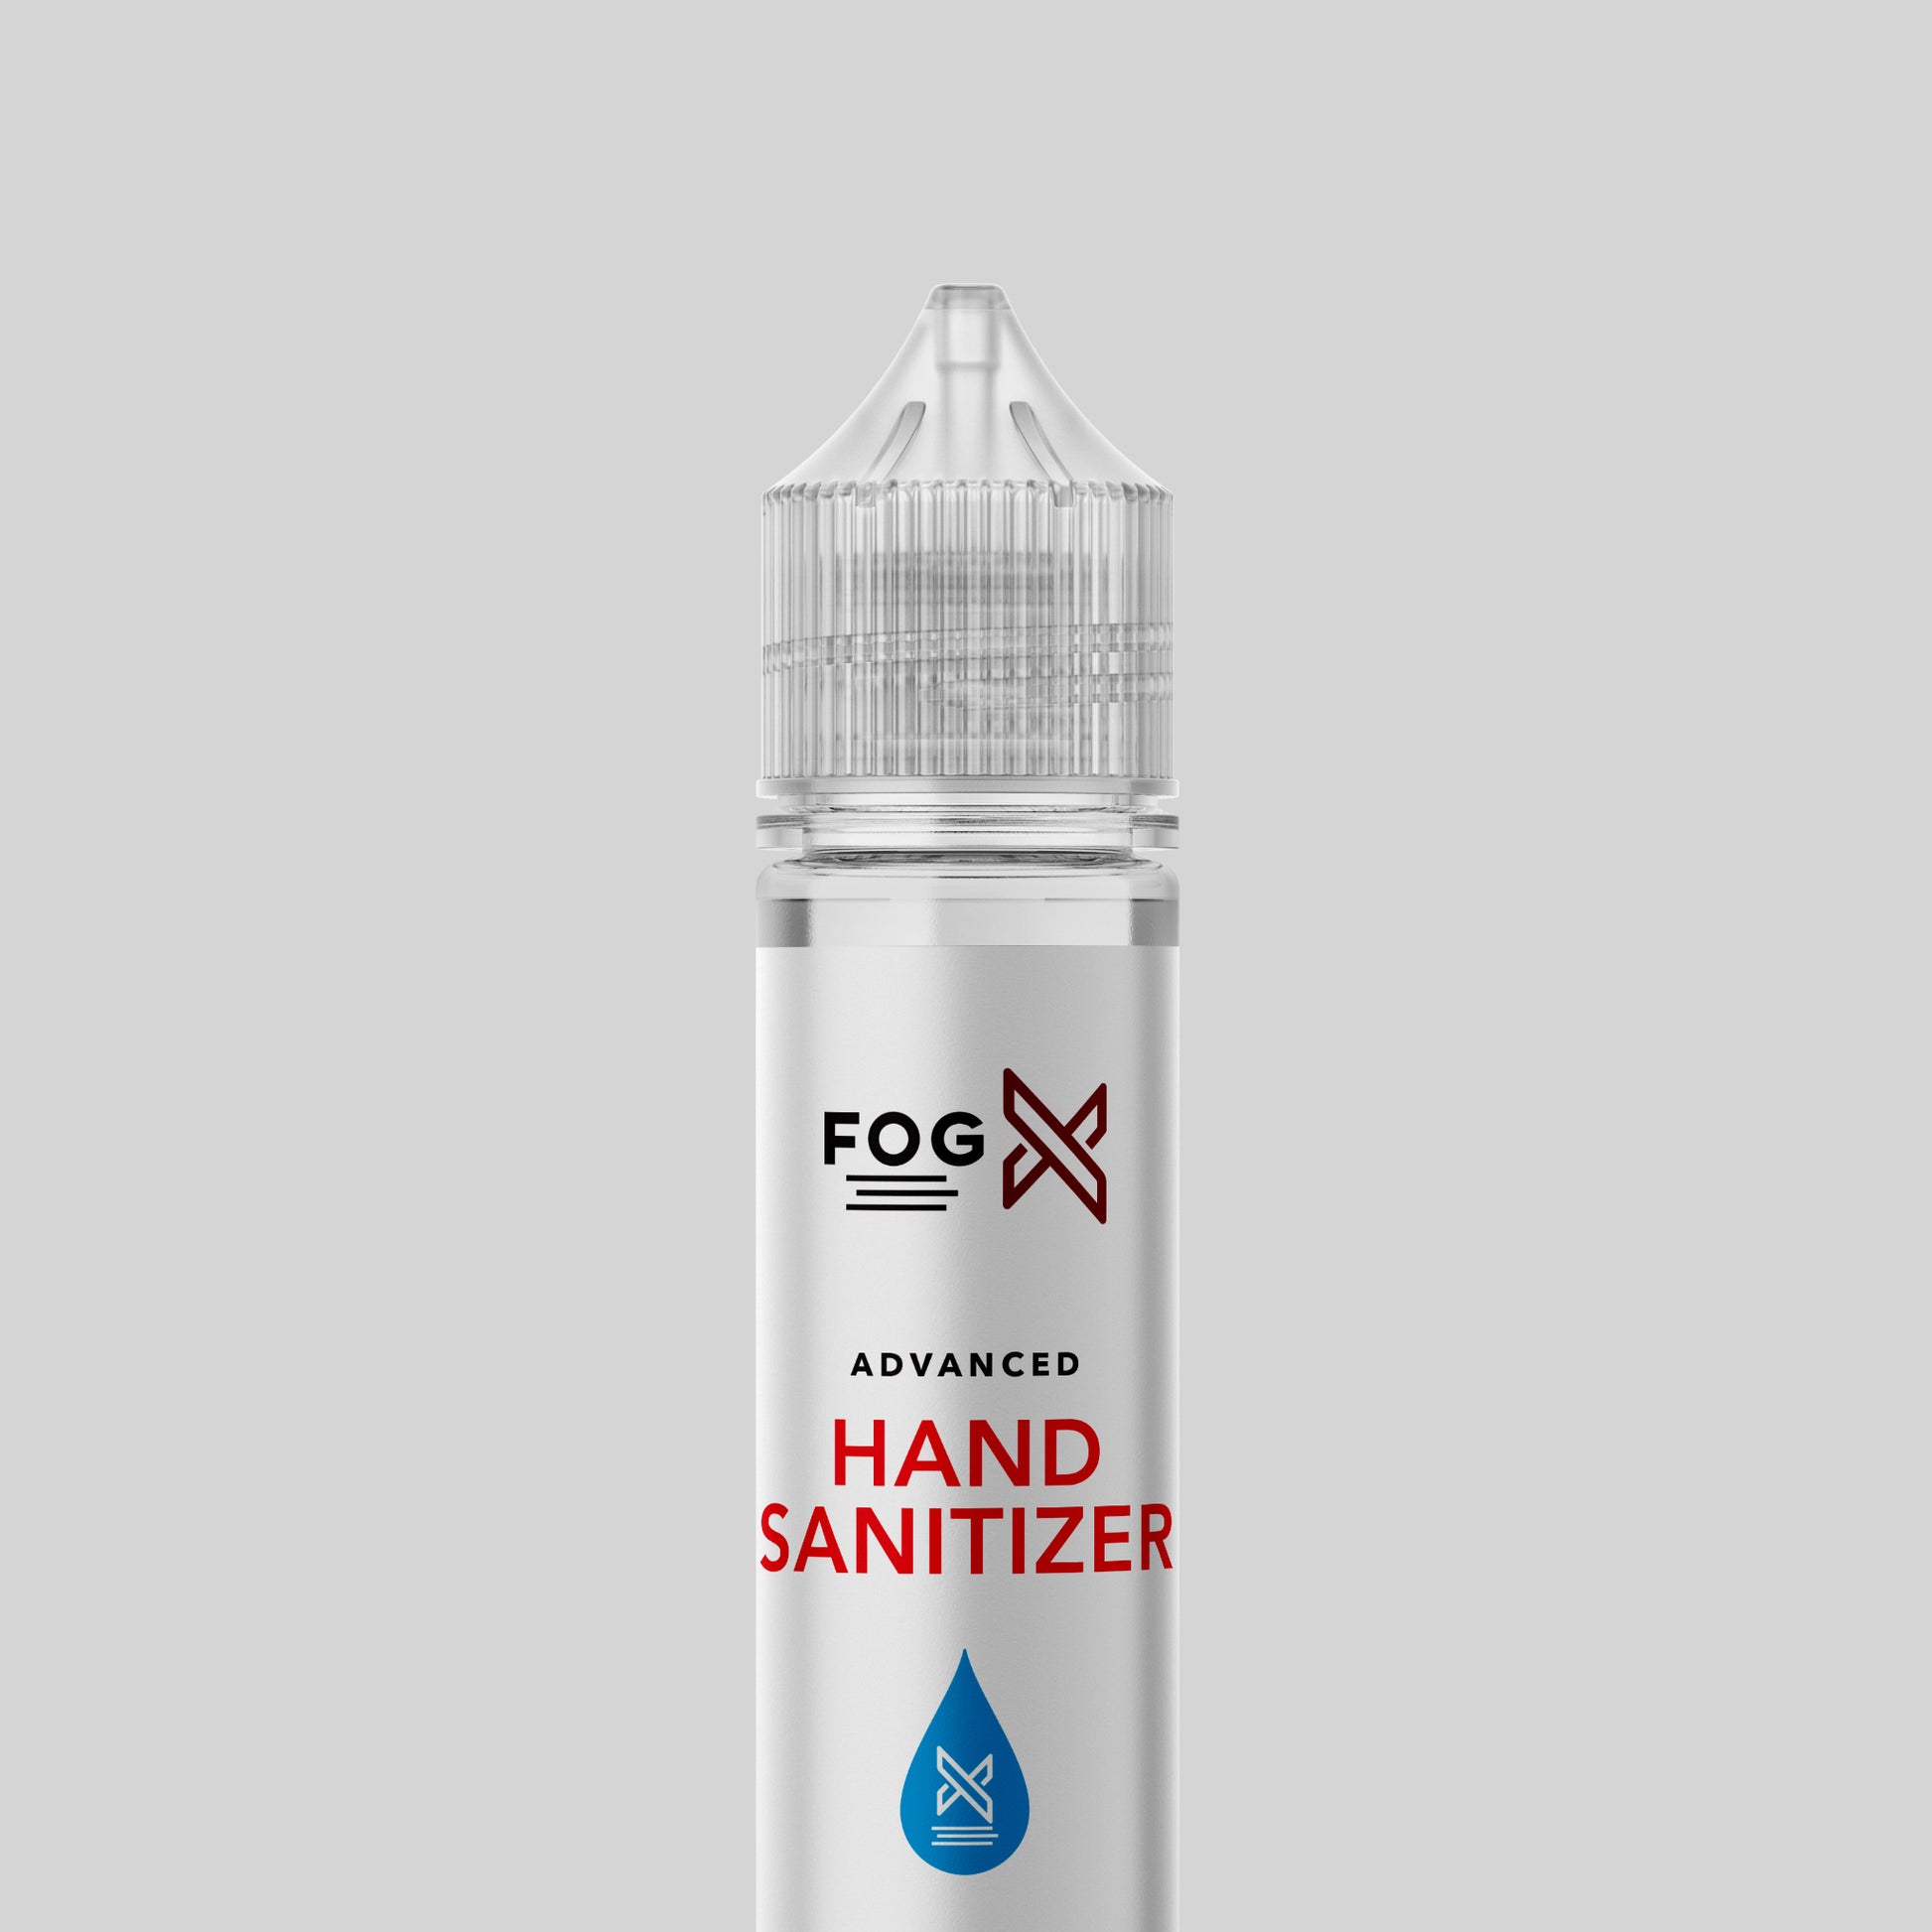 FOG X Vapor Hand Sanitizers